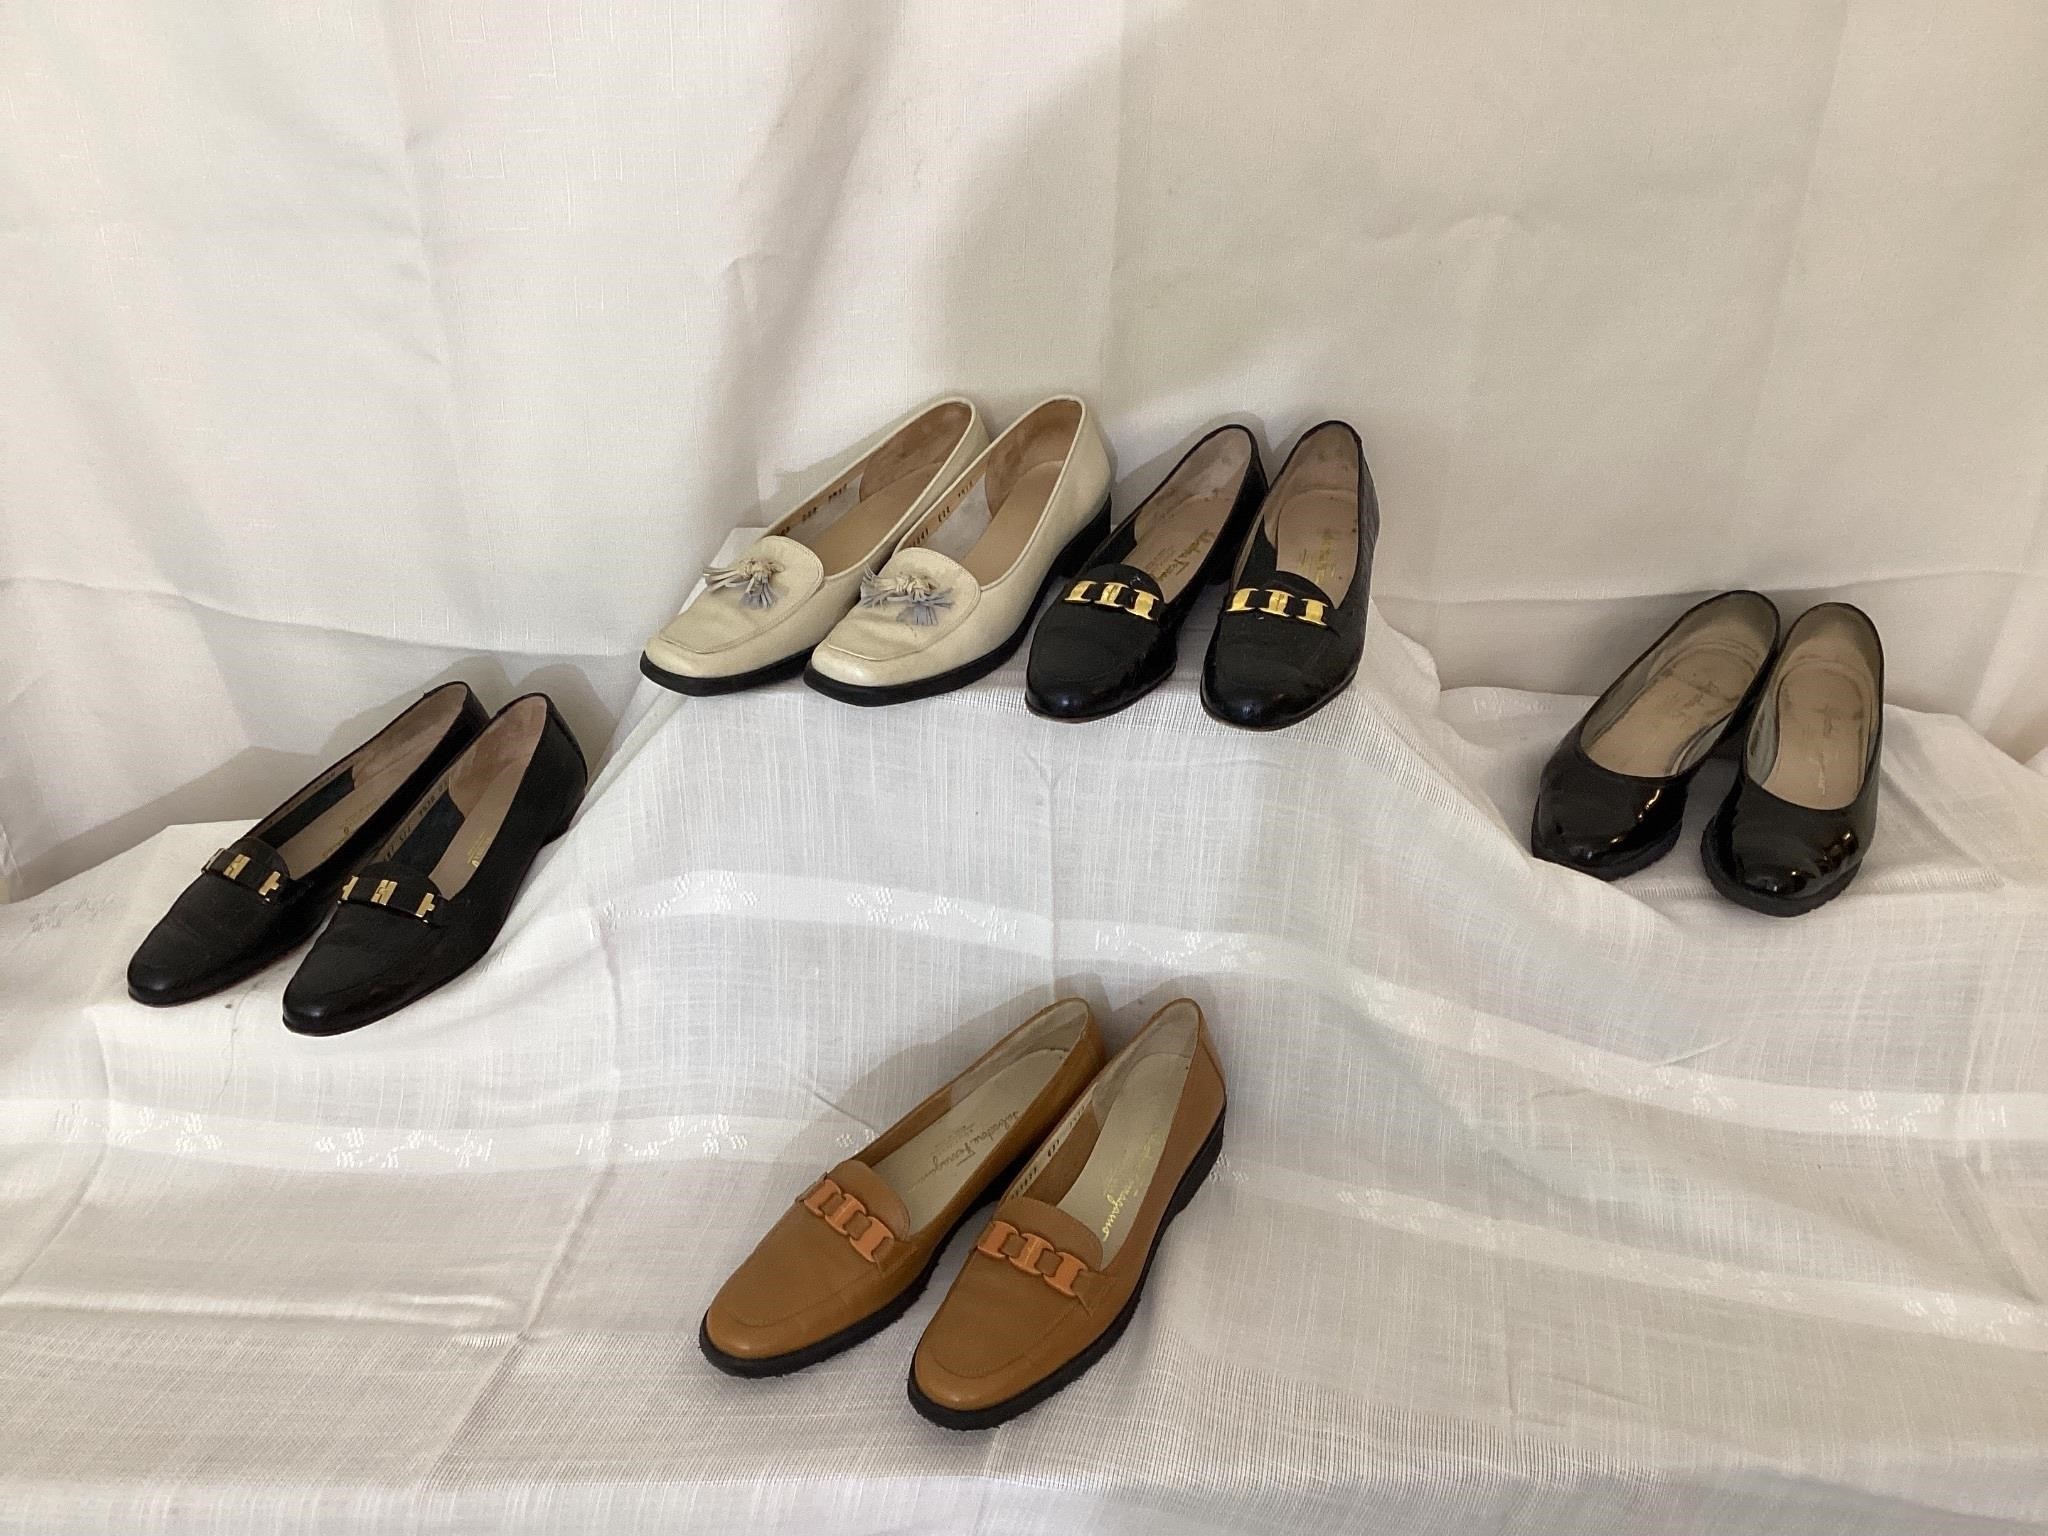 Assorted Ferragamo shoes